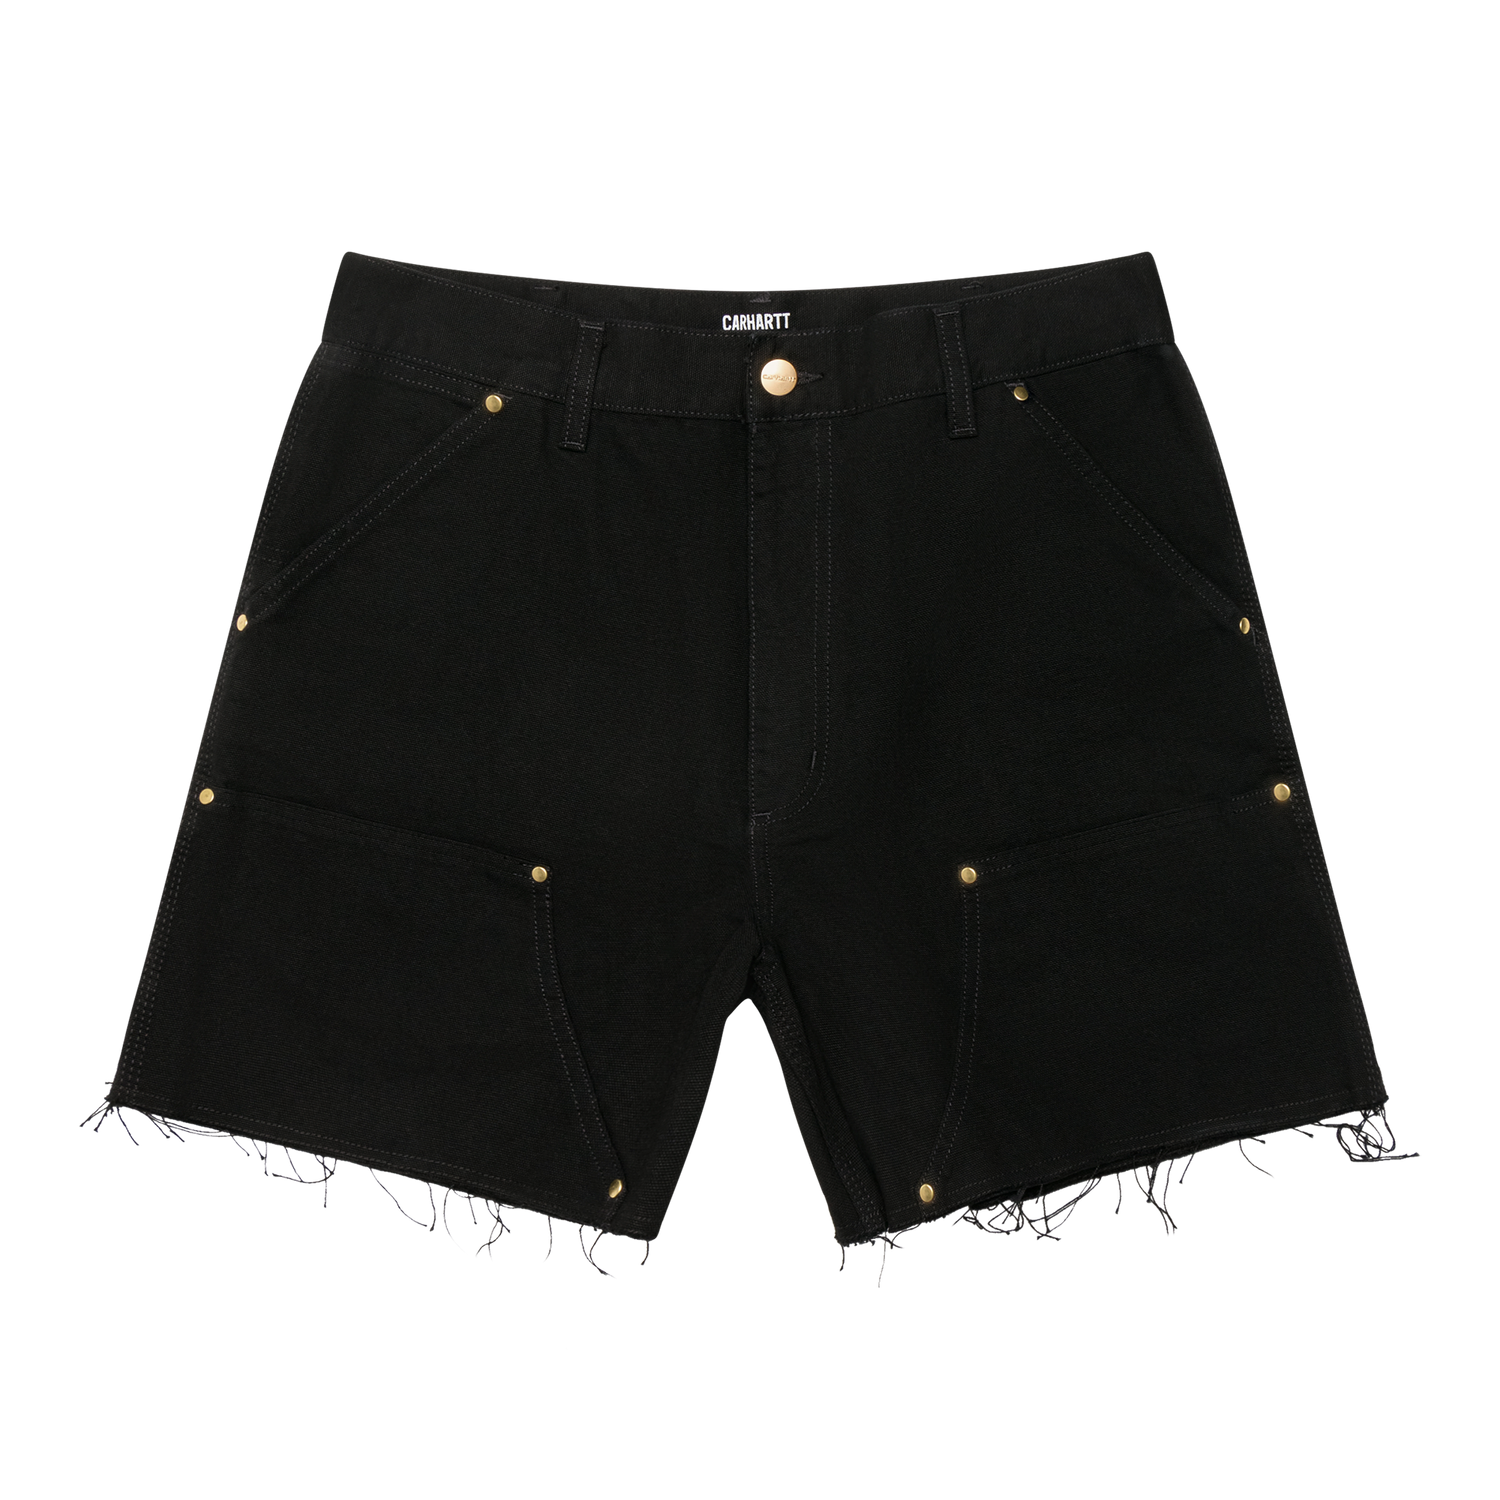 Garden shorts (CHC)